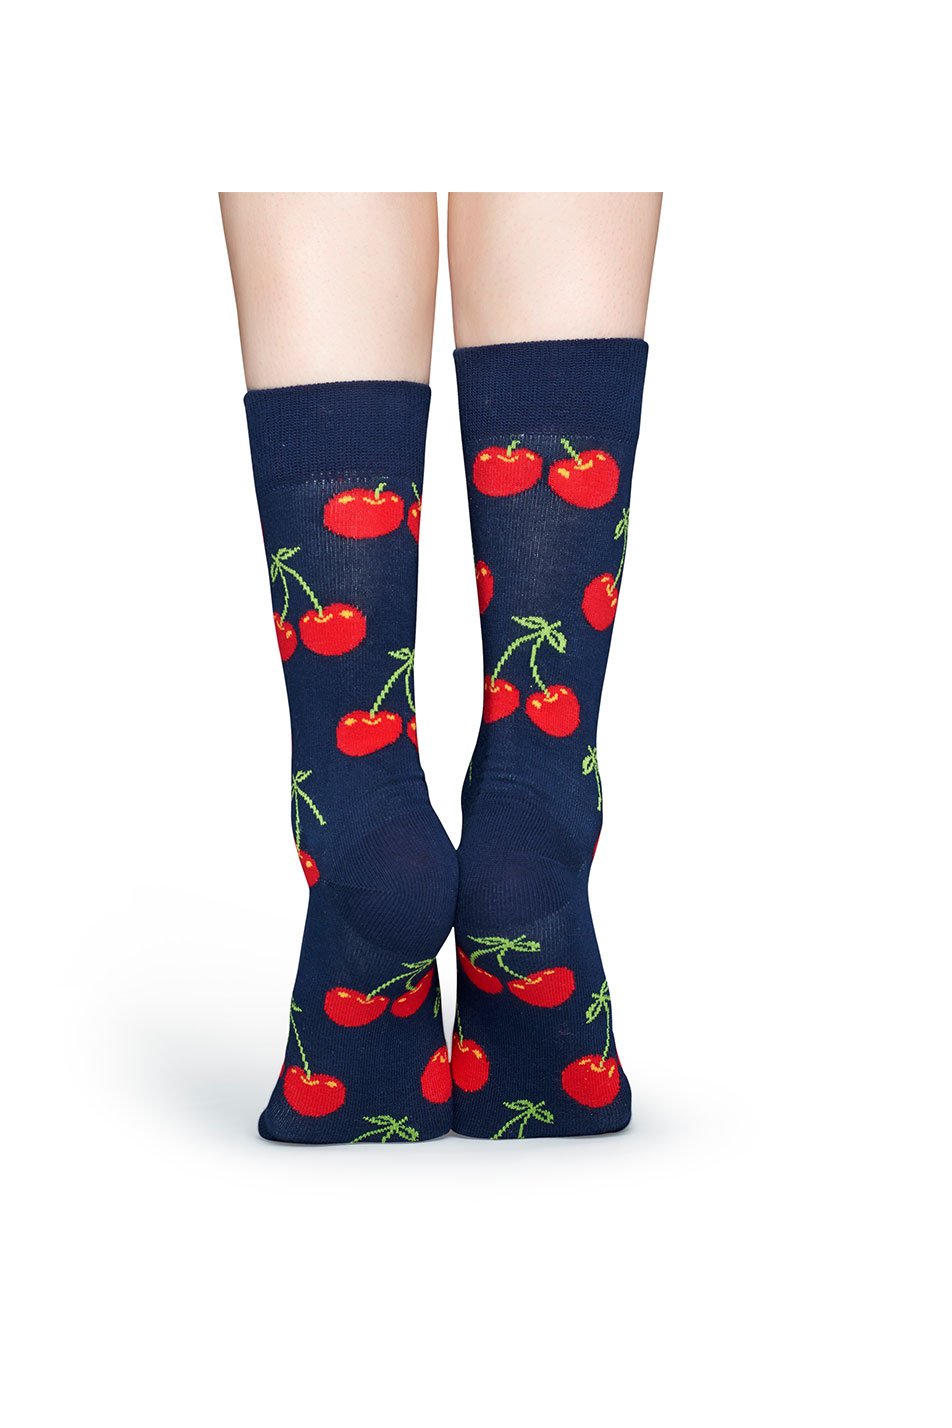 Happy Socks Cherry Sock | Save 20% on Subscription | Pants & Socks